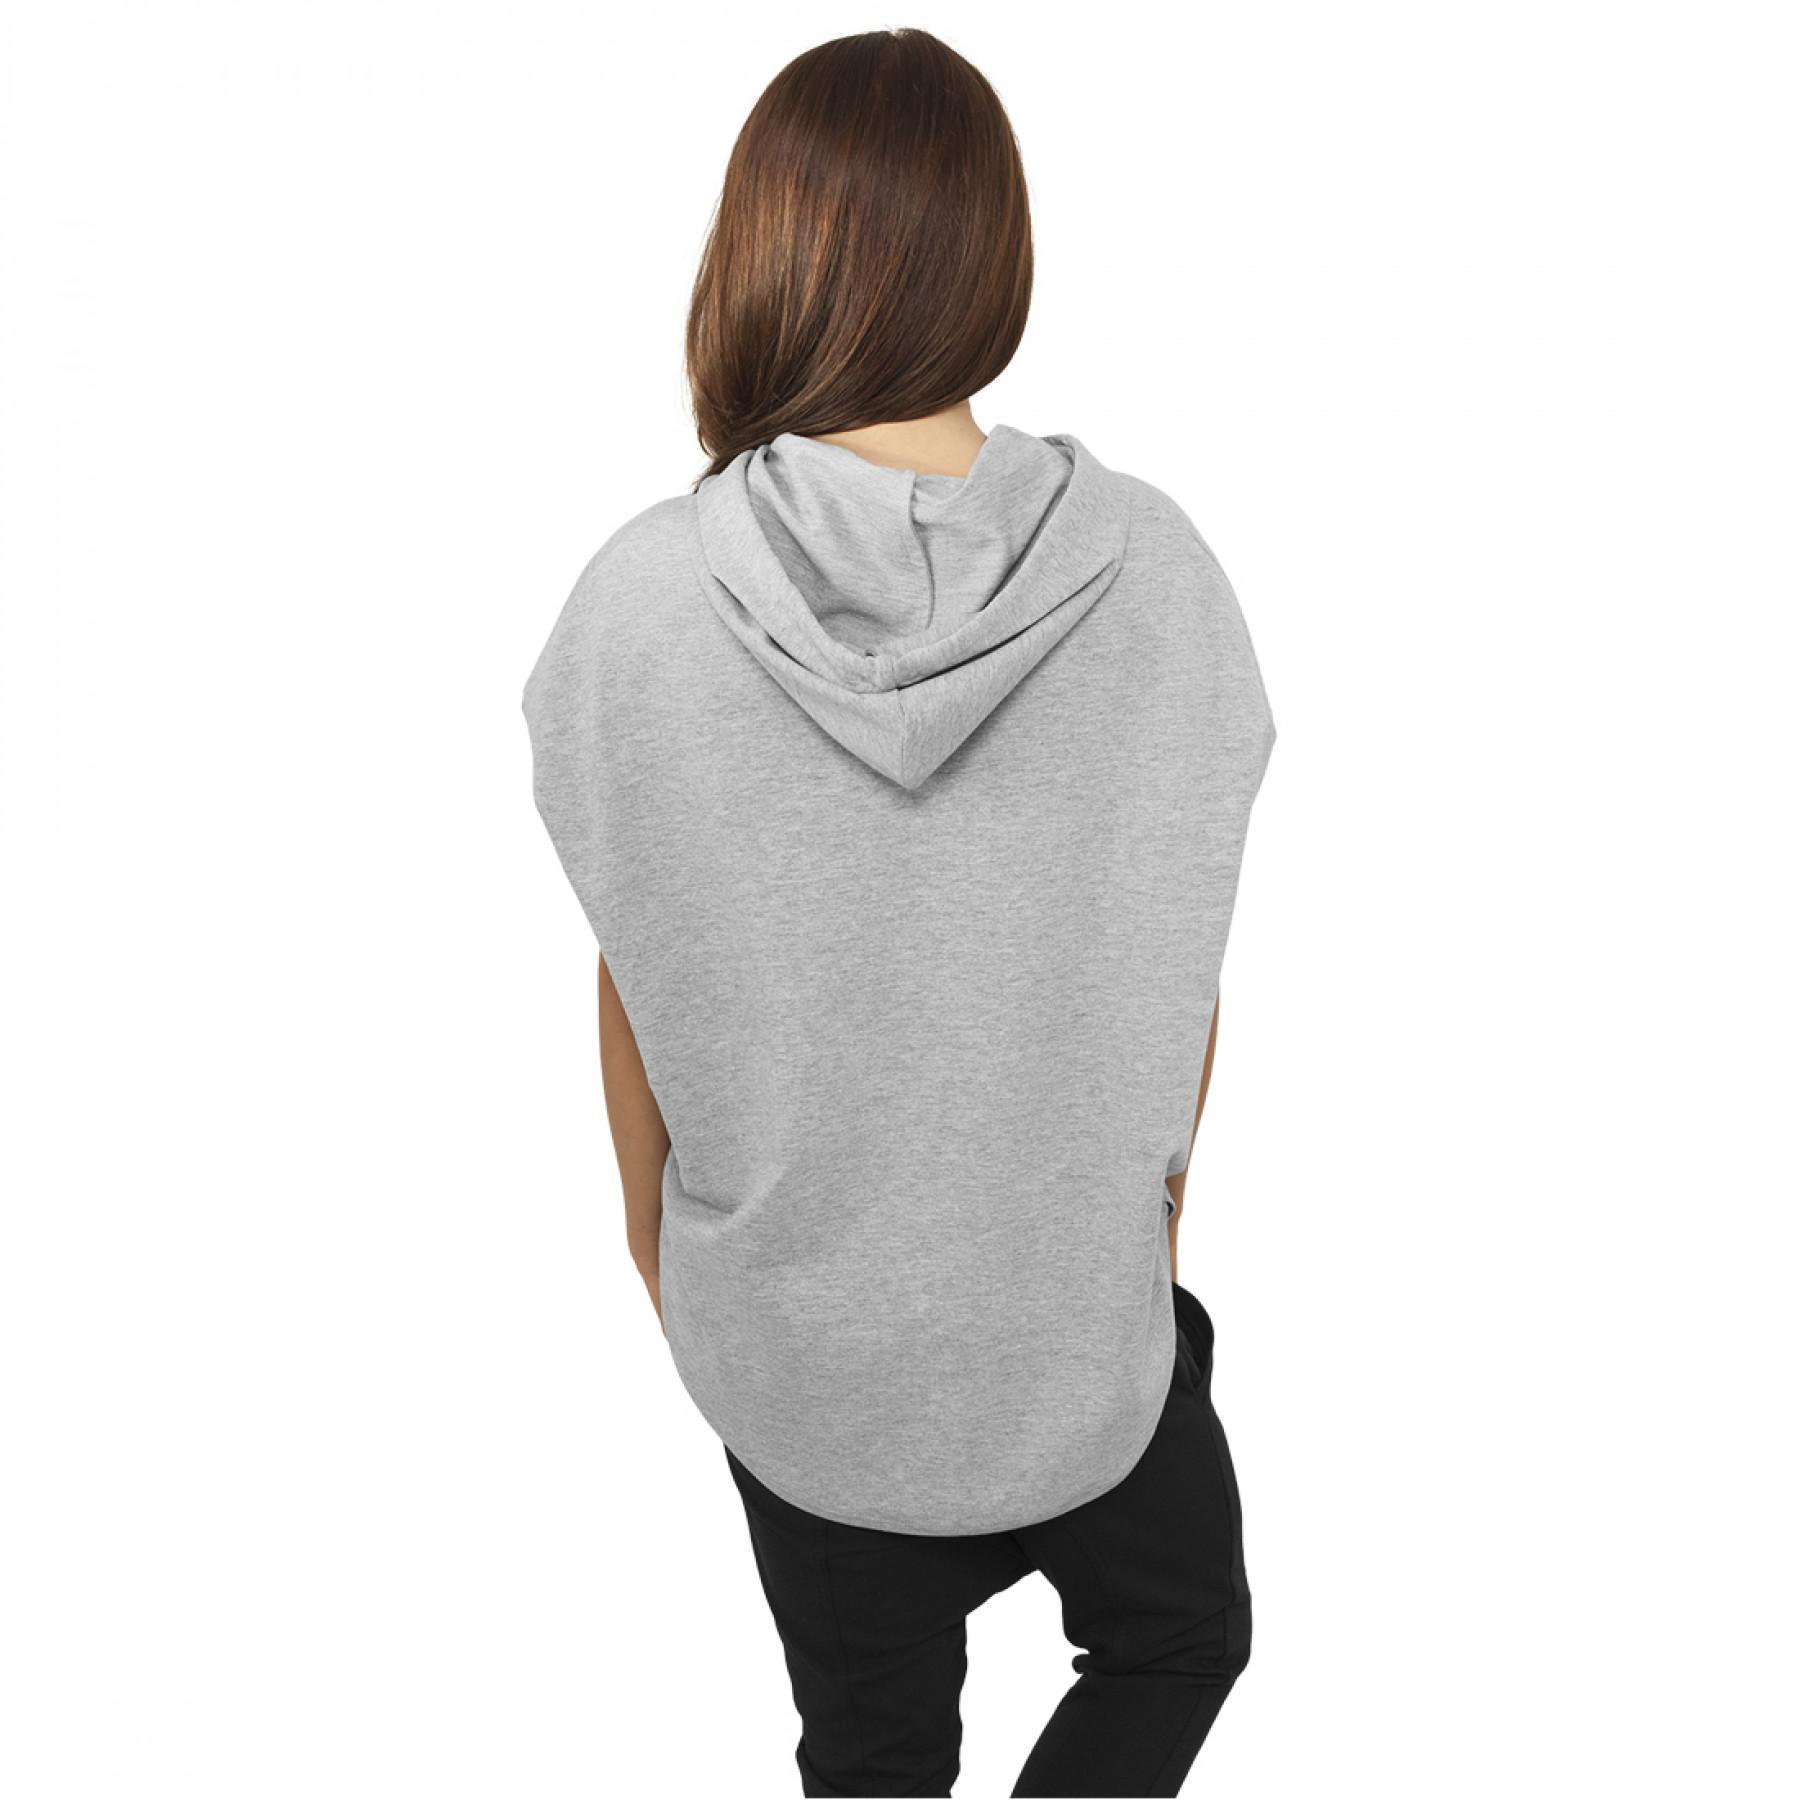 Women's hooded sweatshirt urban Classic basic terry